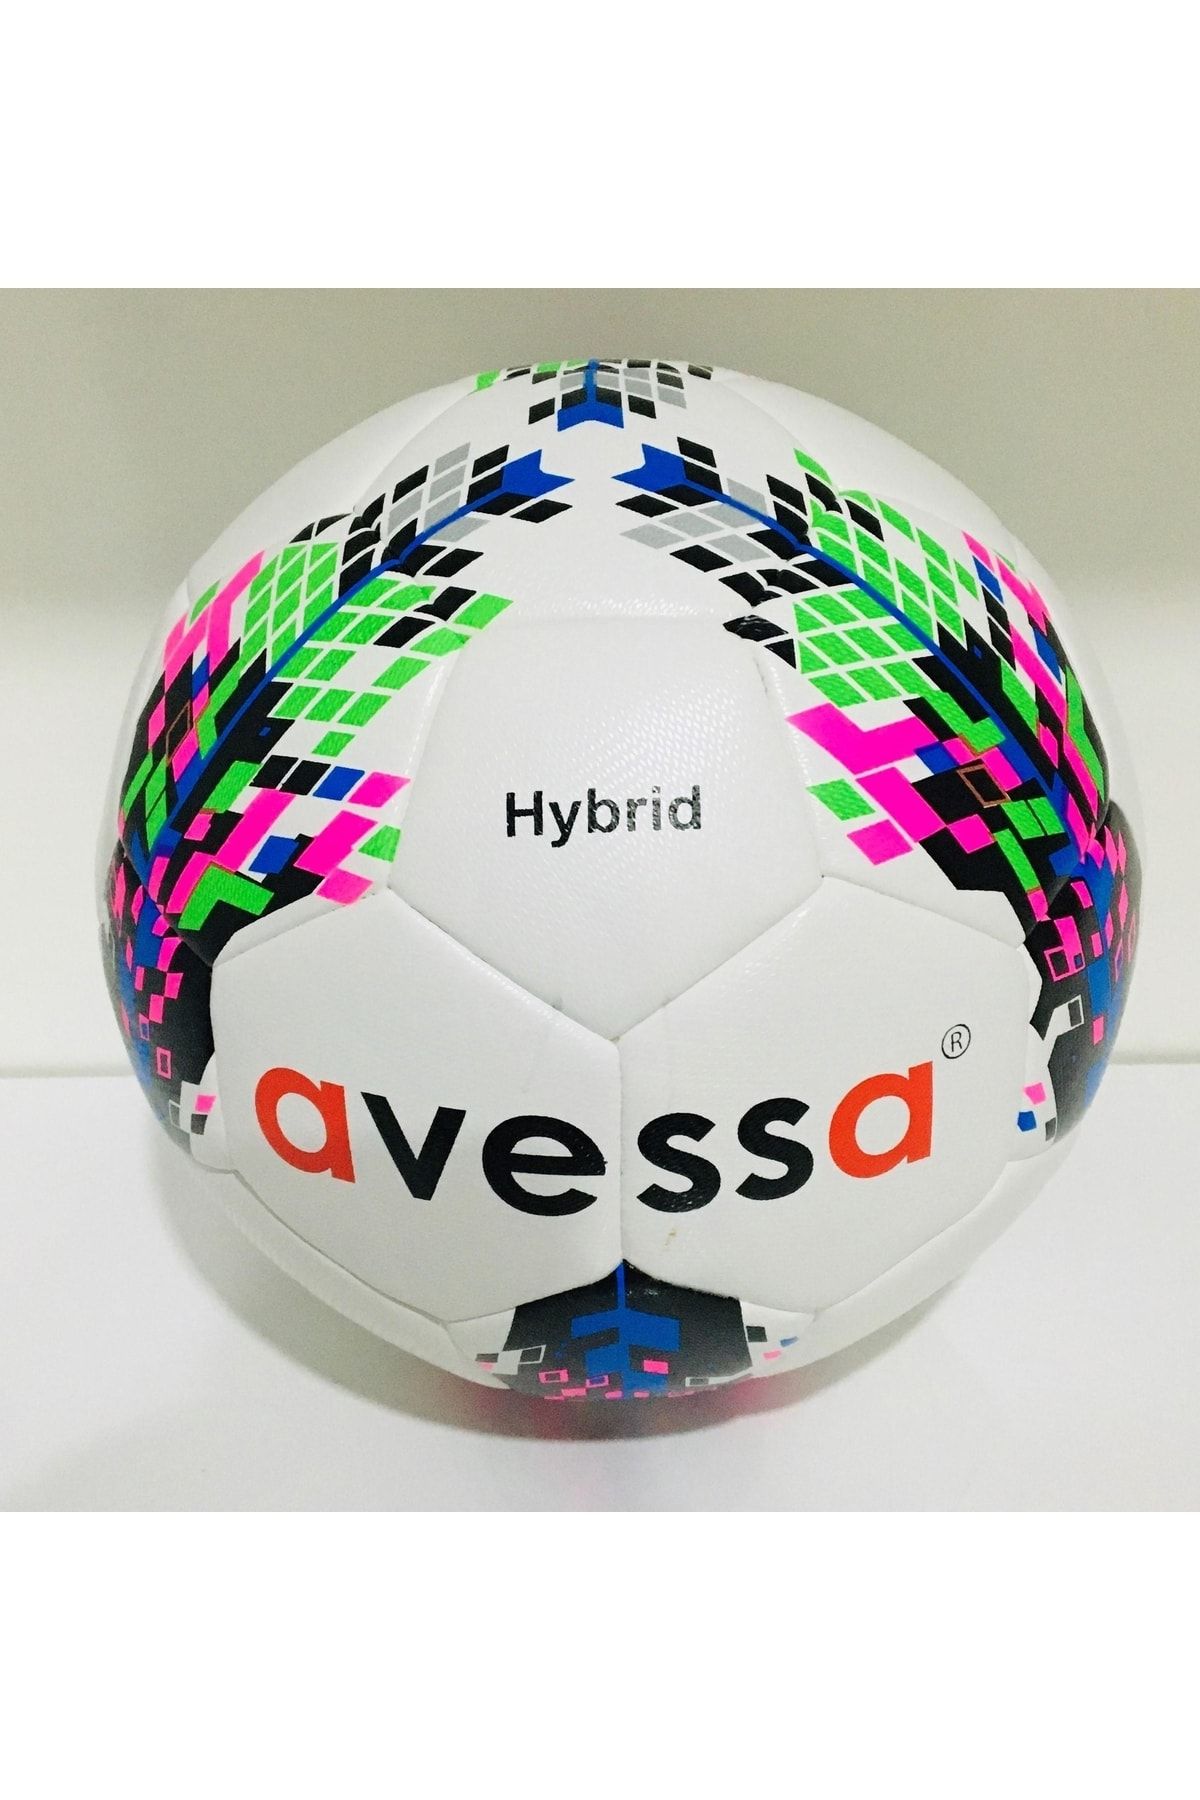 Avessa Hybrid Futbol Topu 5 No Hft-1000-100